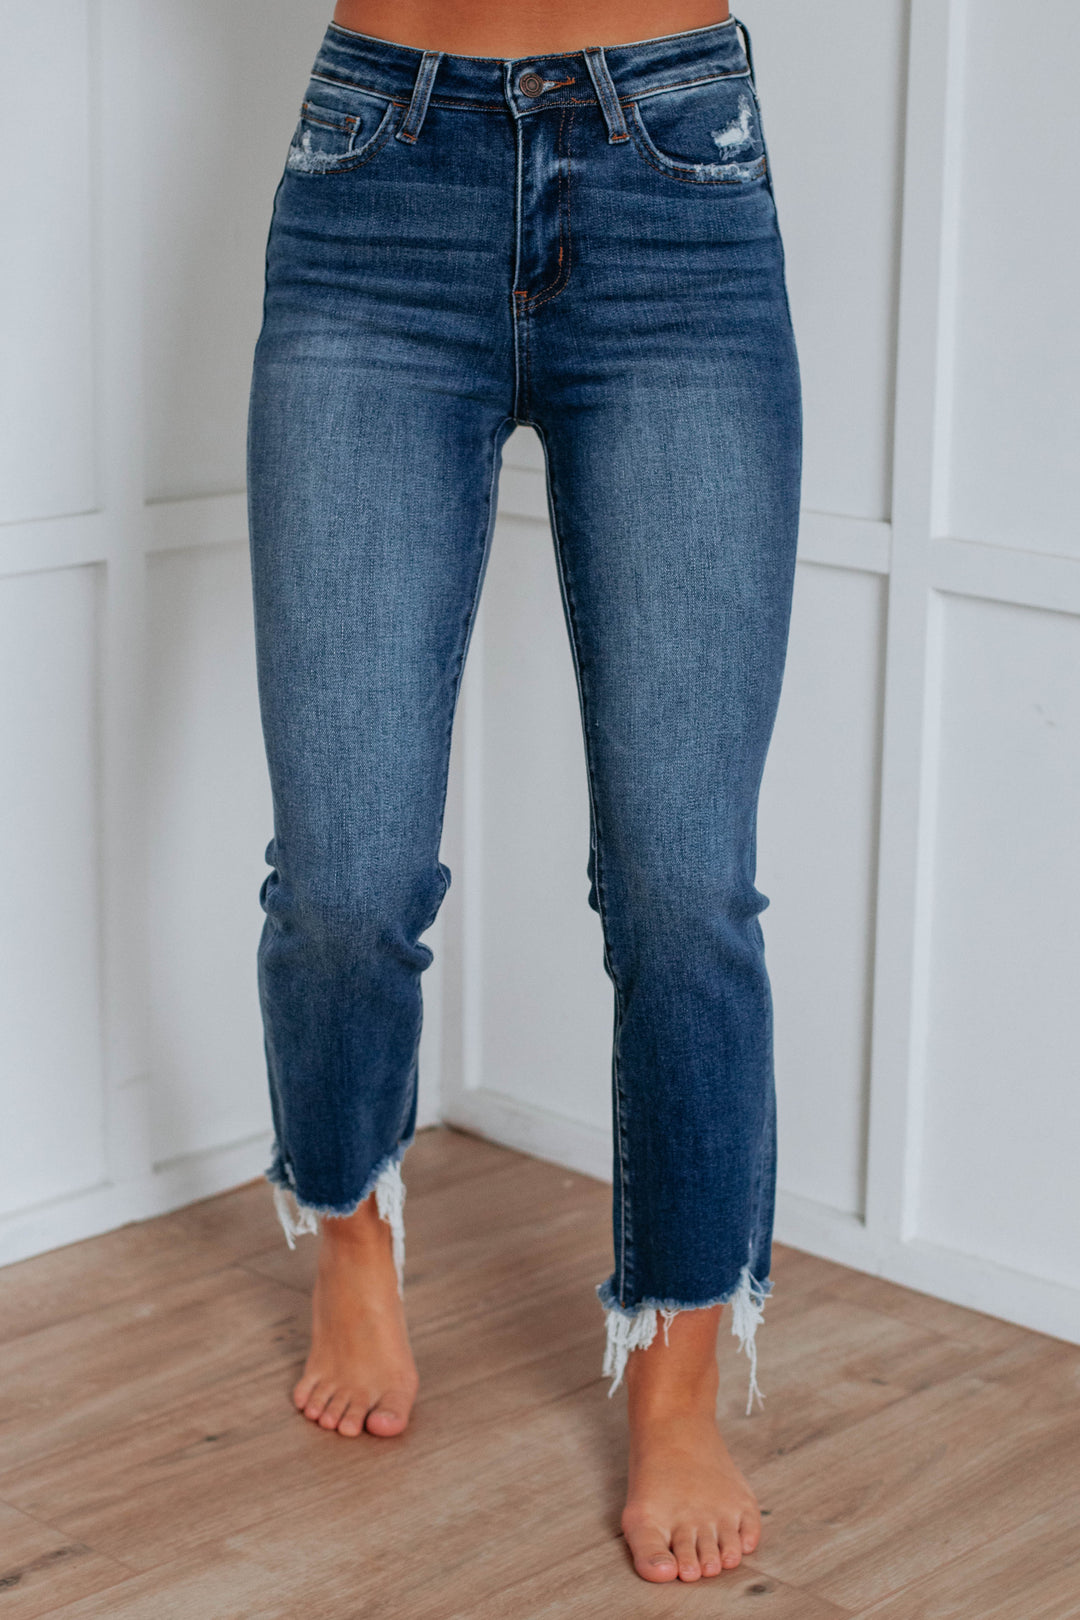 Bella Vervet Jeans